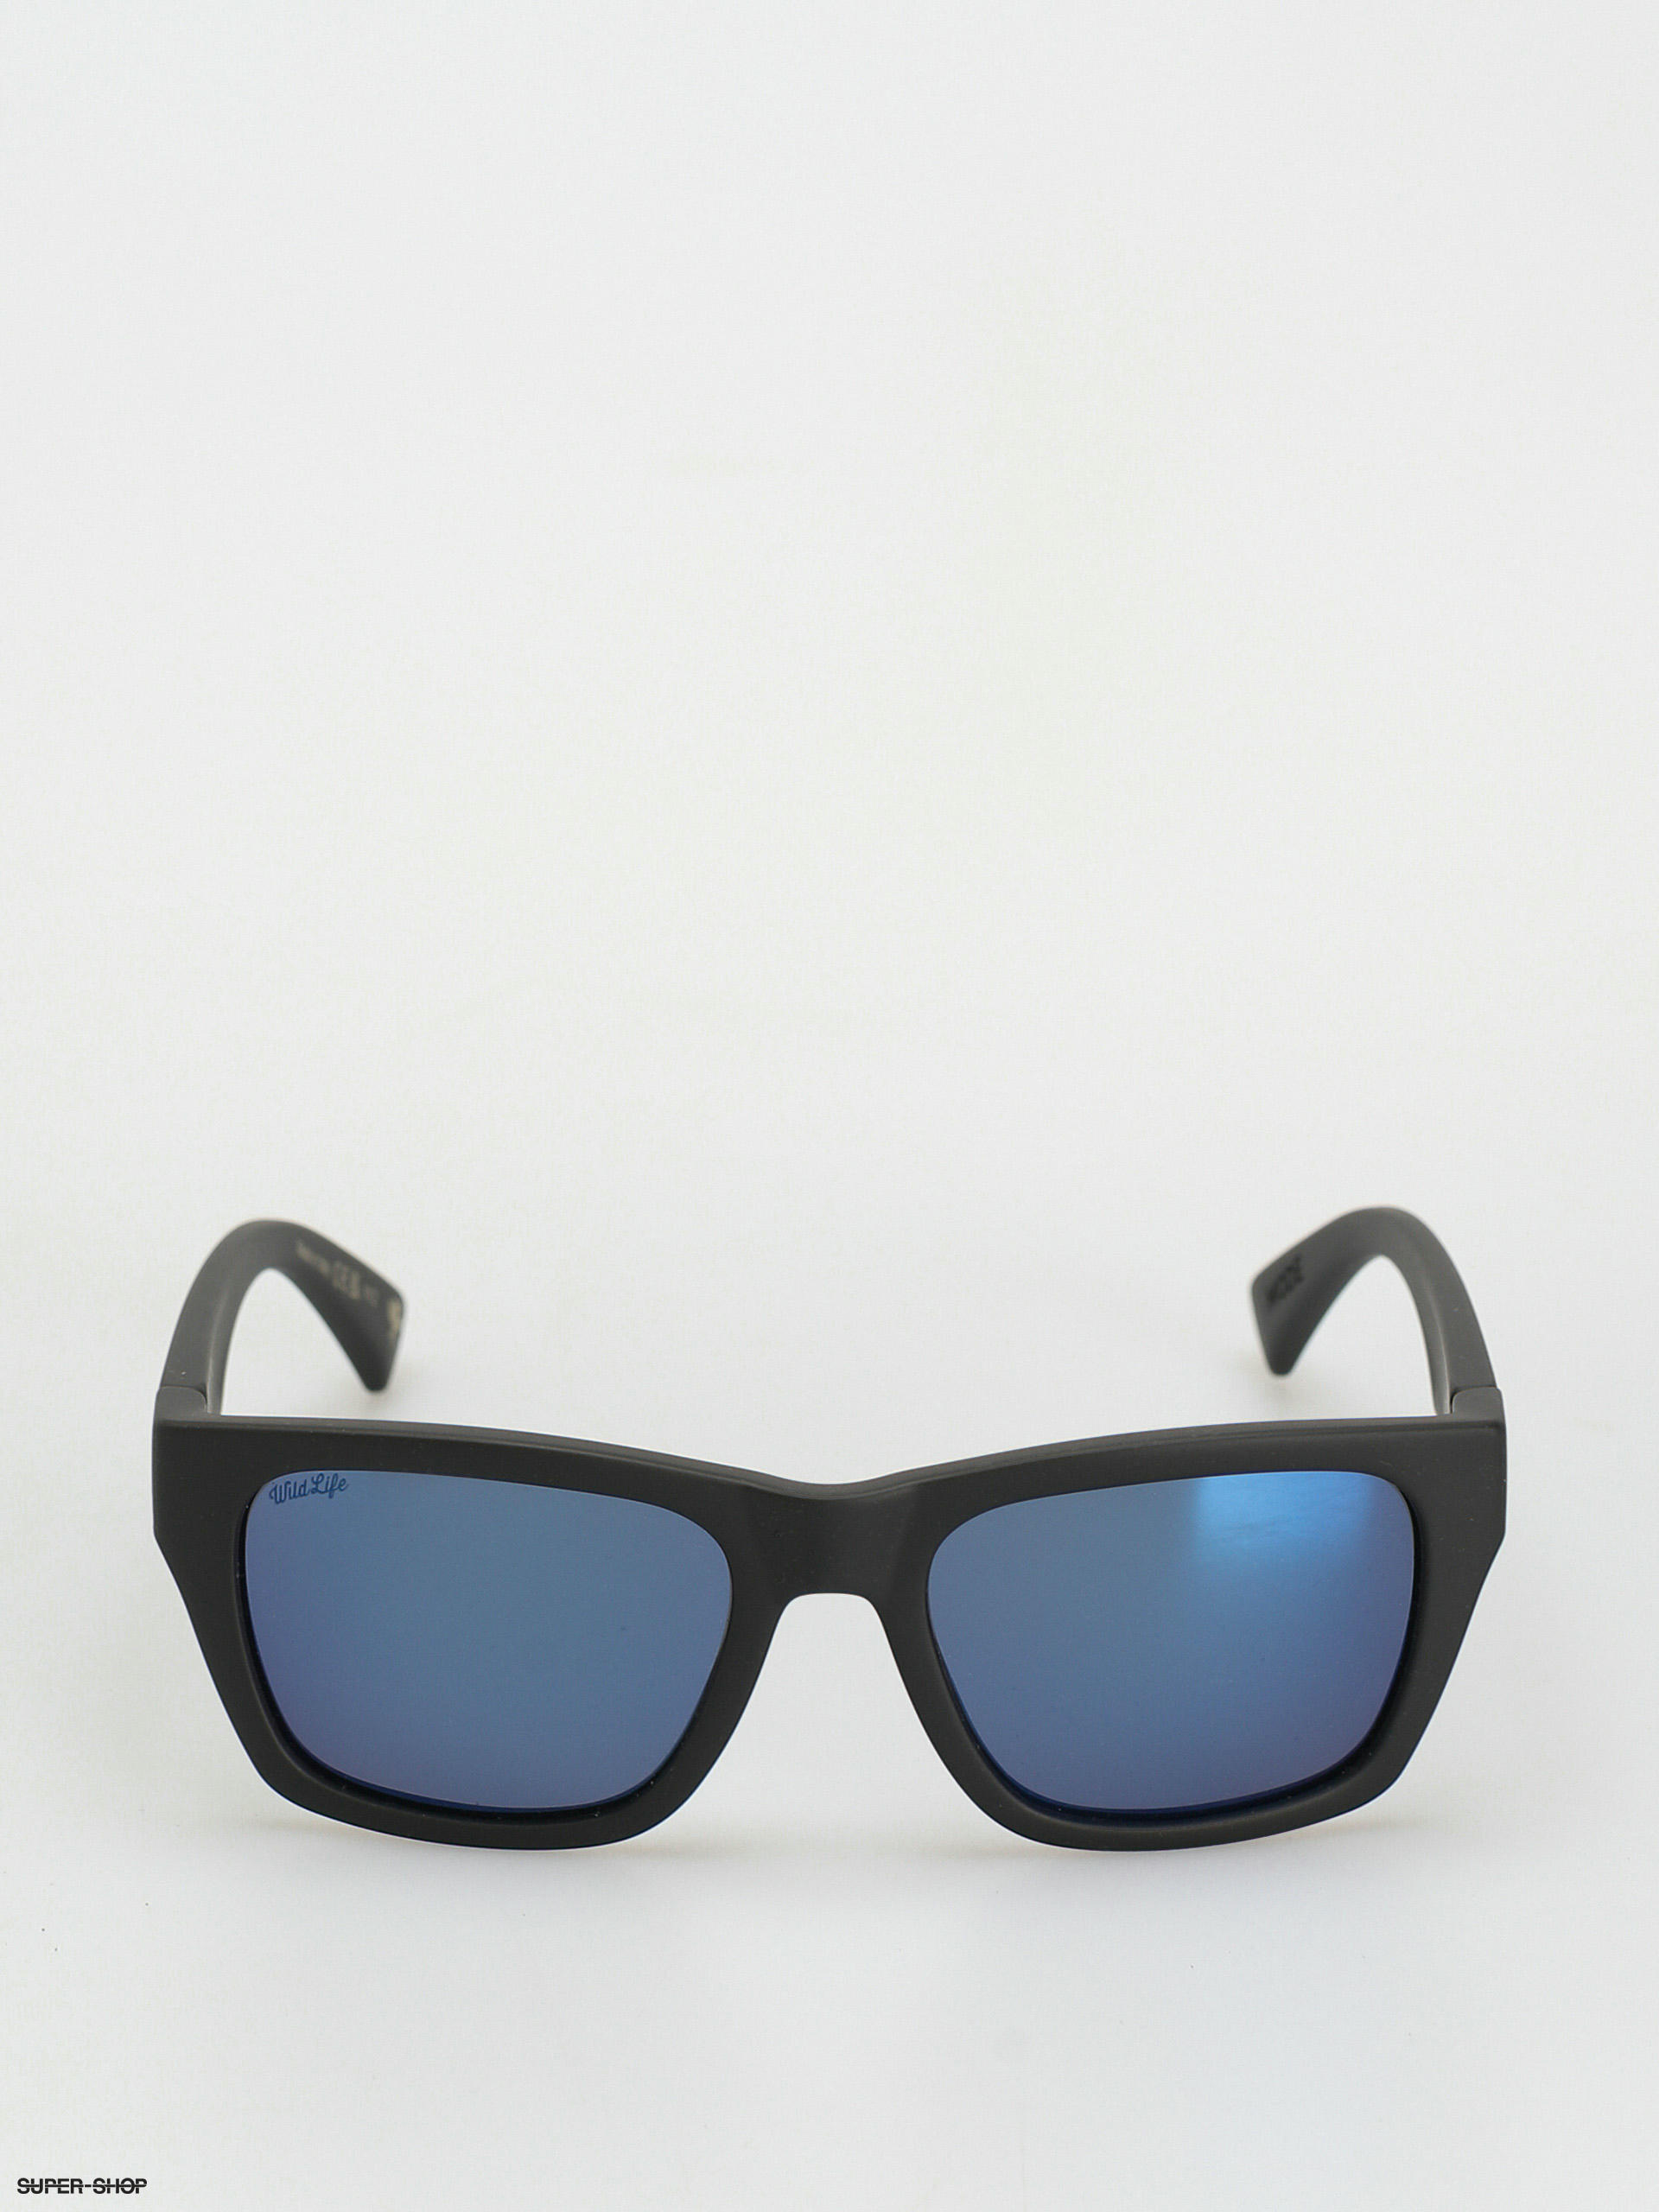 Von Zipper Mode (blk Sunglasses Polar plr) flsh sat/blu